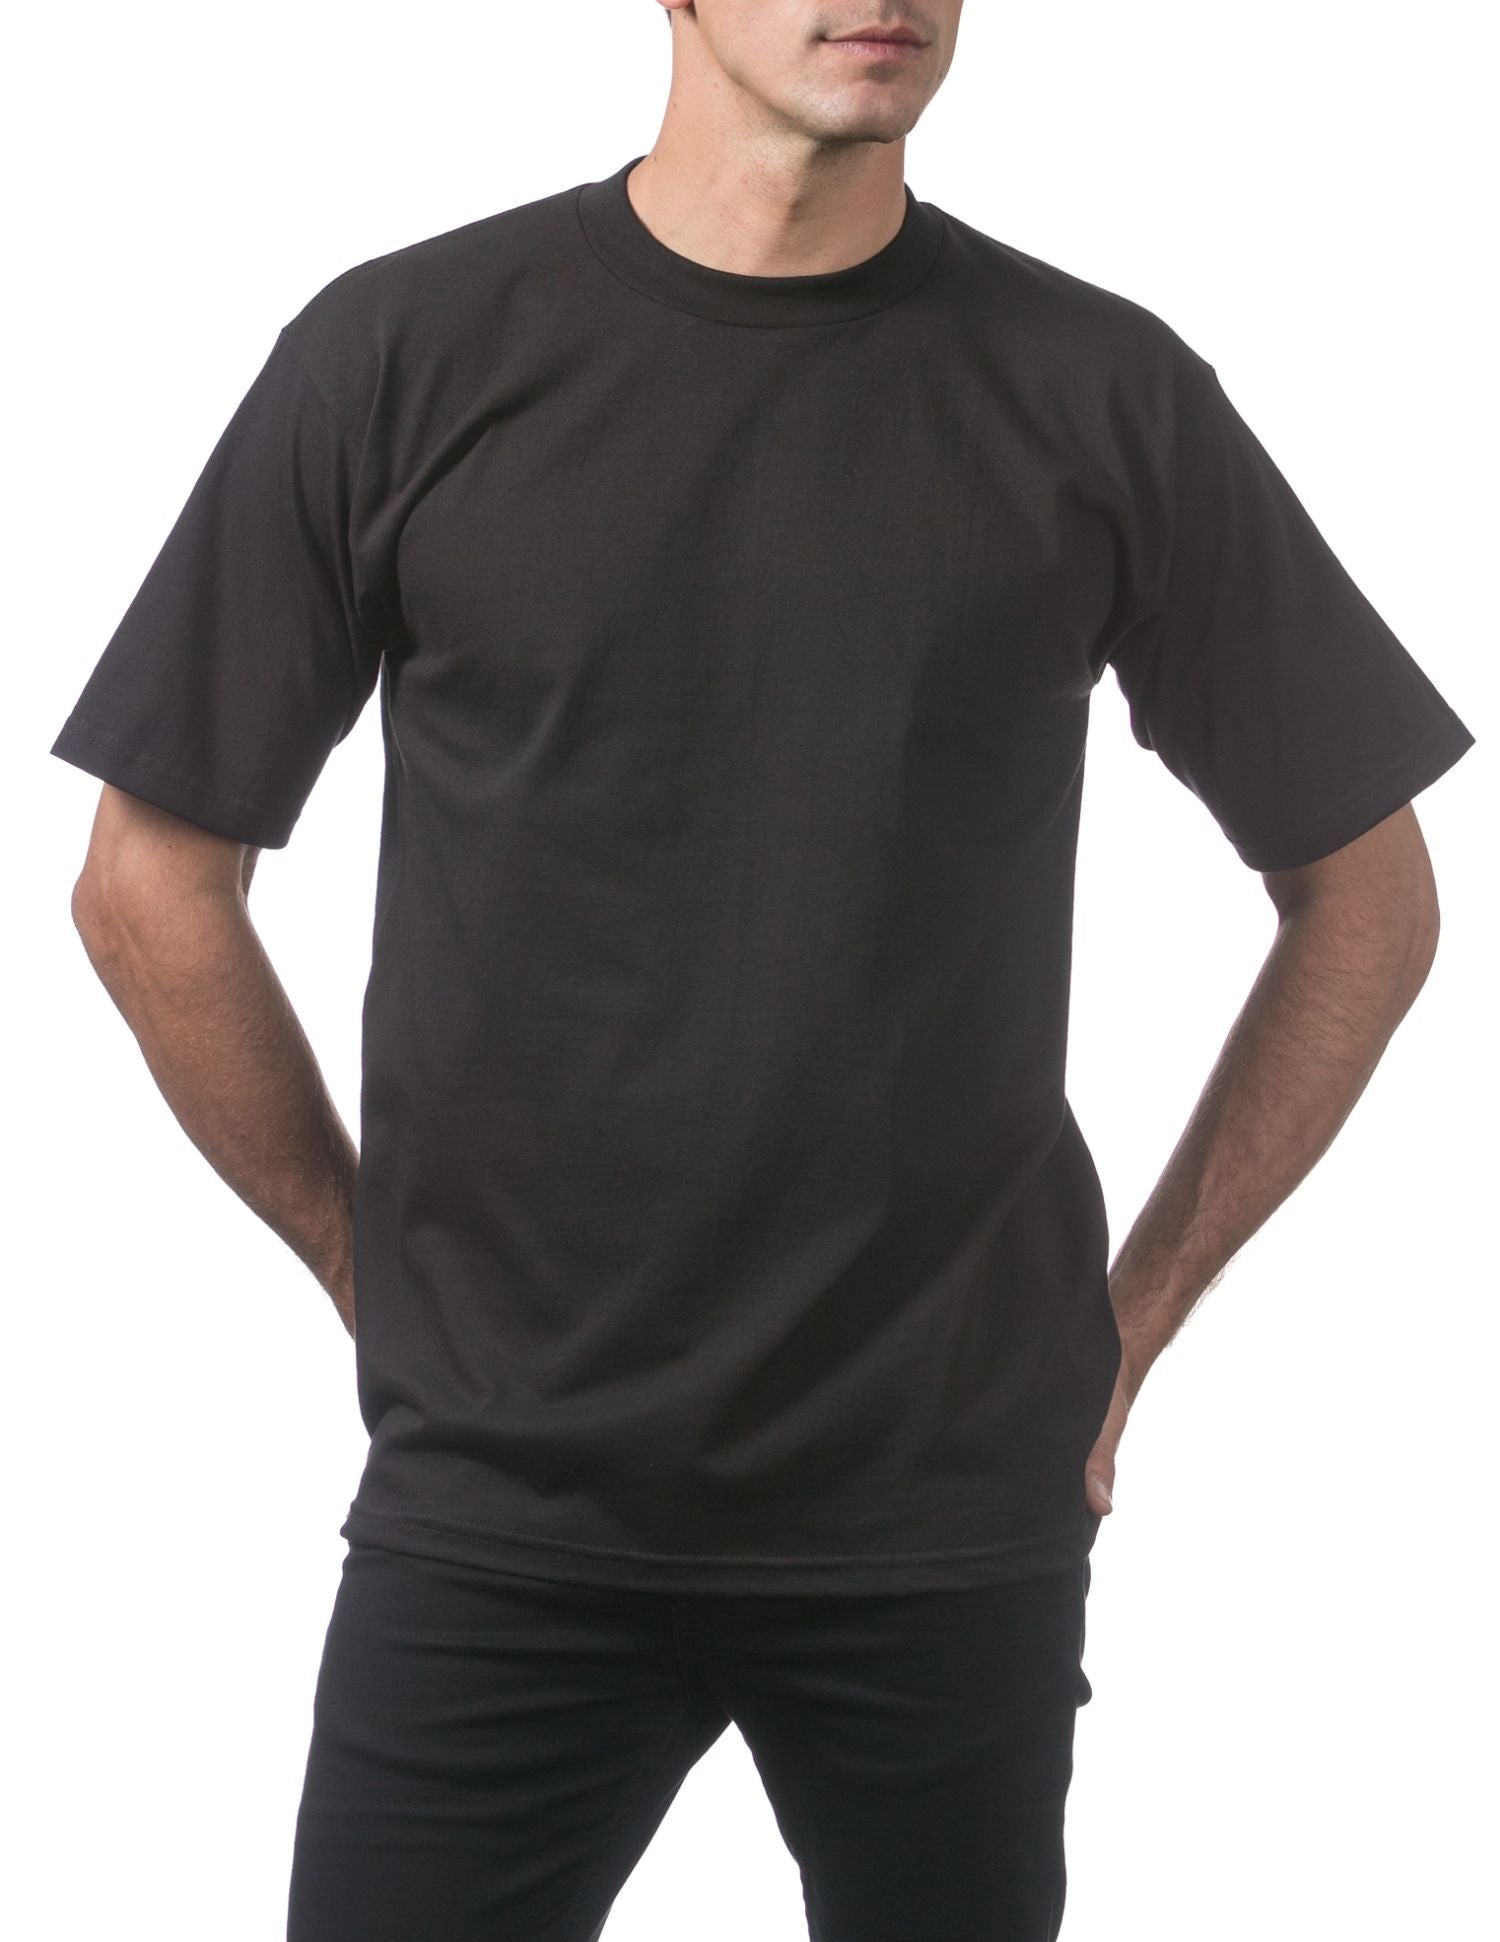 Pro Club Men's Heavyweight Short Sleeve Crew Neck T-Shirt - Black - Large